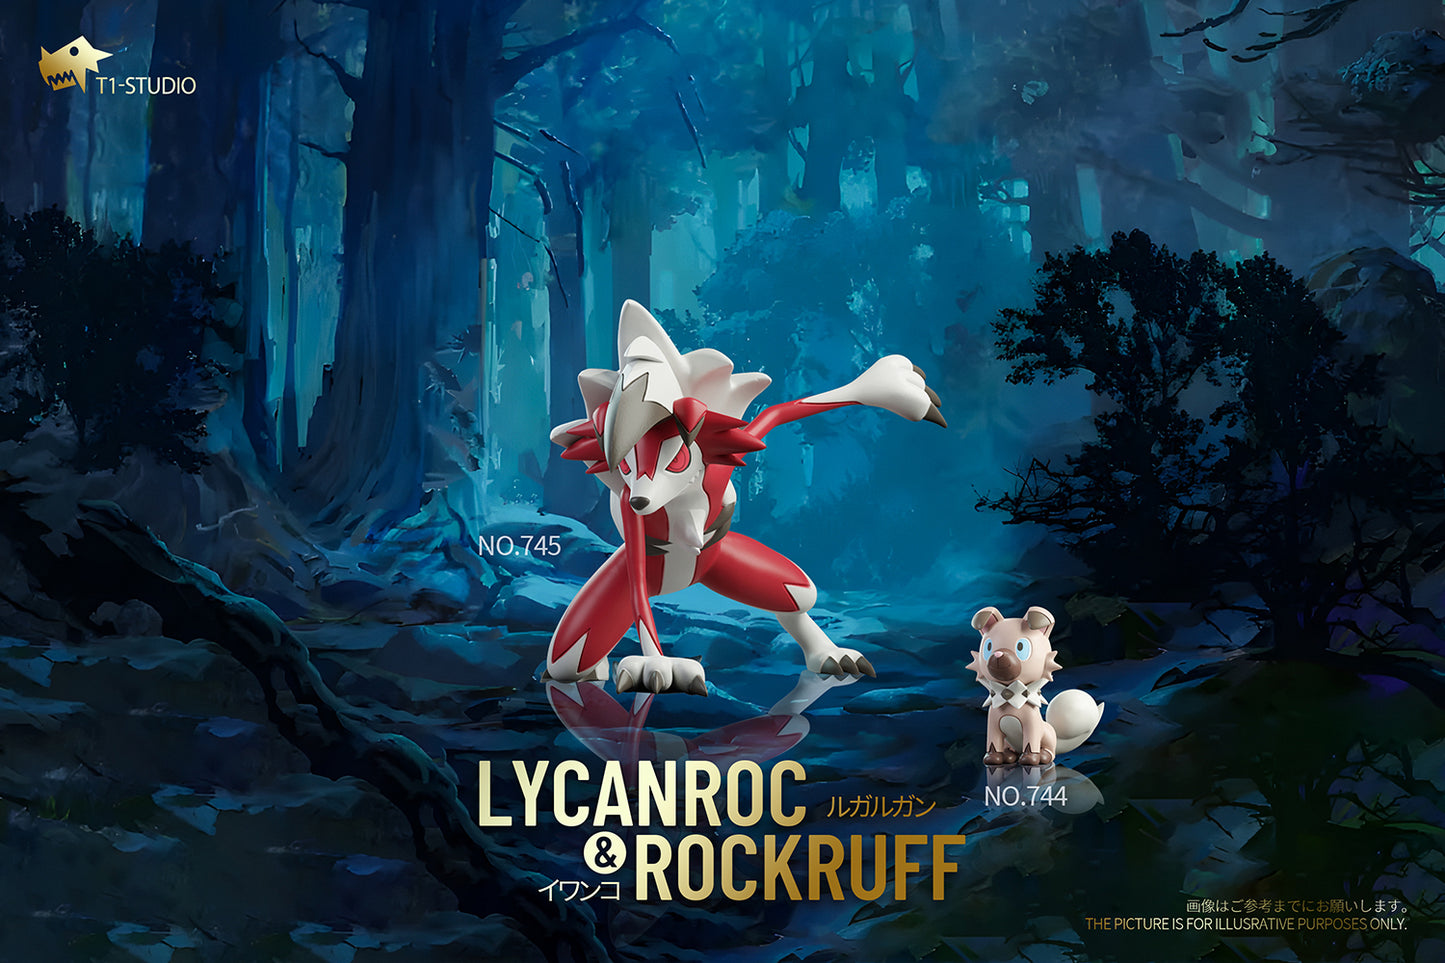 〖Sold Out〗Pokemon Scale World Rockruff Lycanroc #744 #745 1:20 -T1 Studio